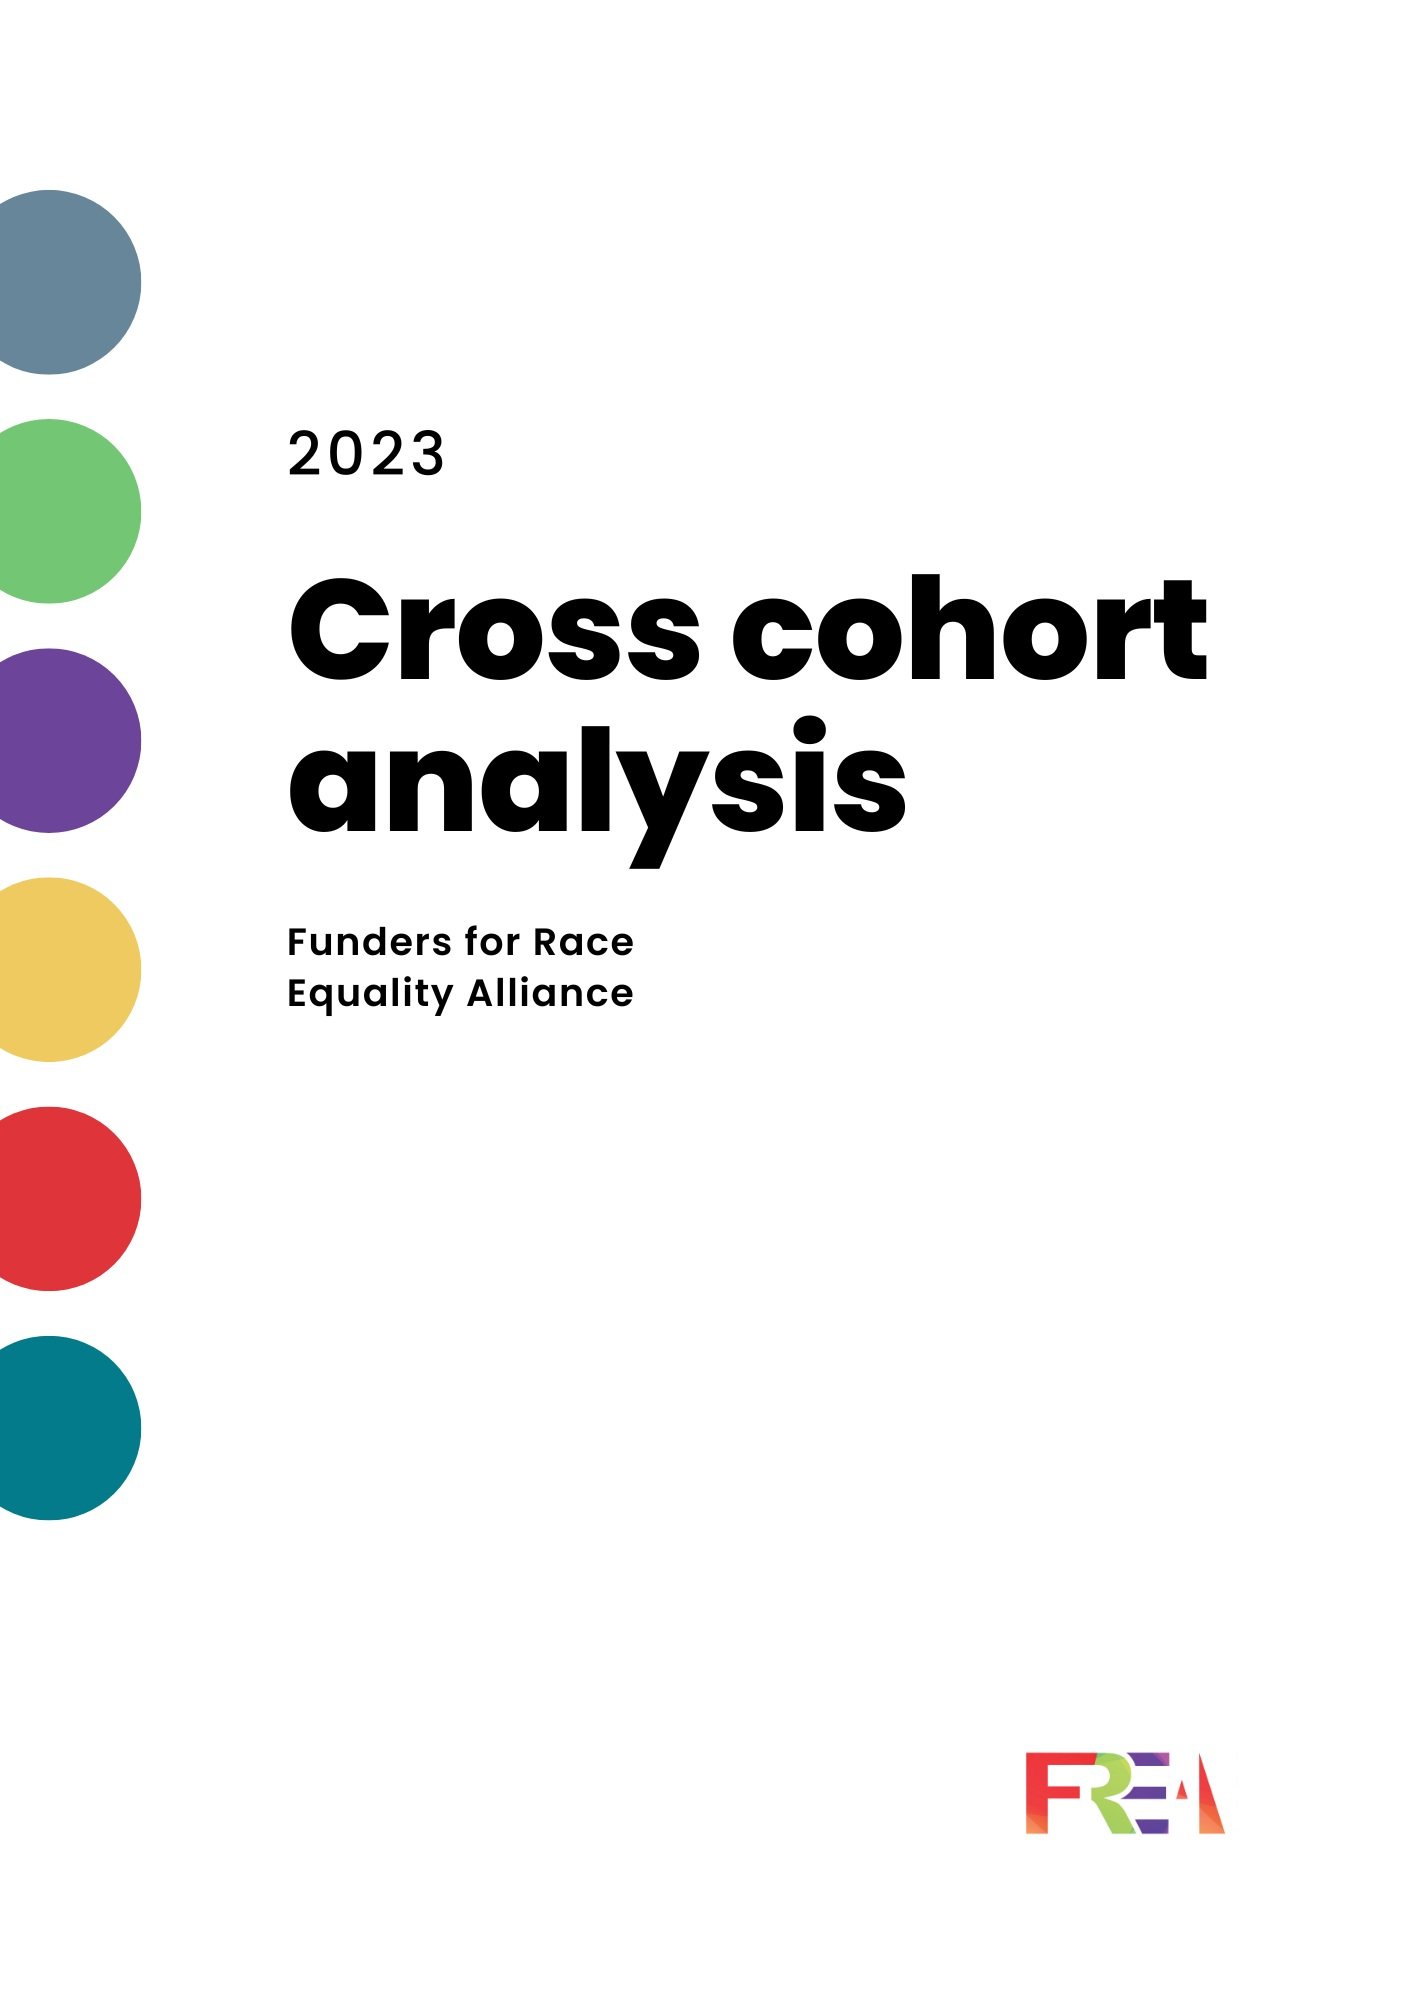 Cross cohort analysis report